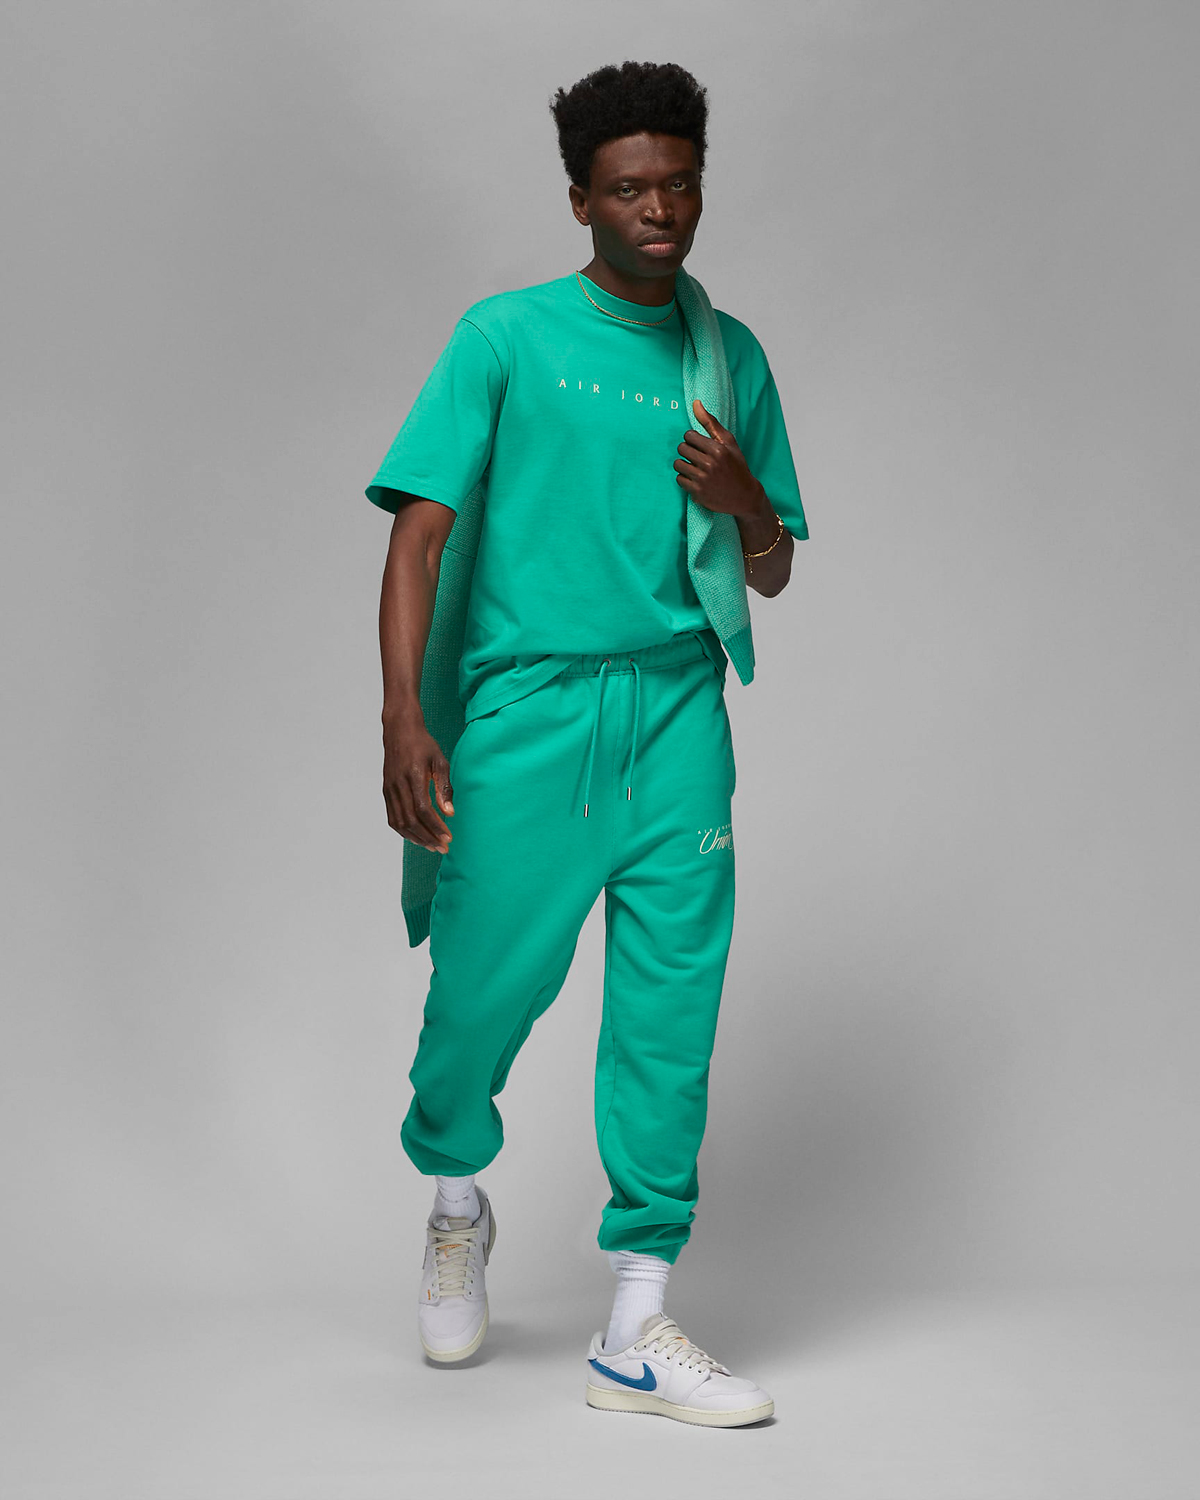 Jordan-Union-Shirt-and-Pants-Kinetic-Green